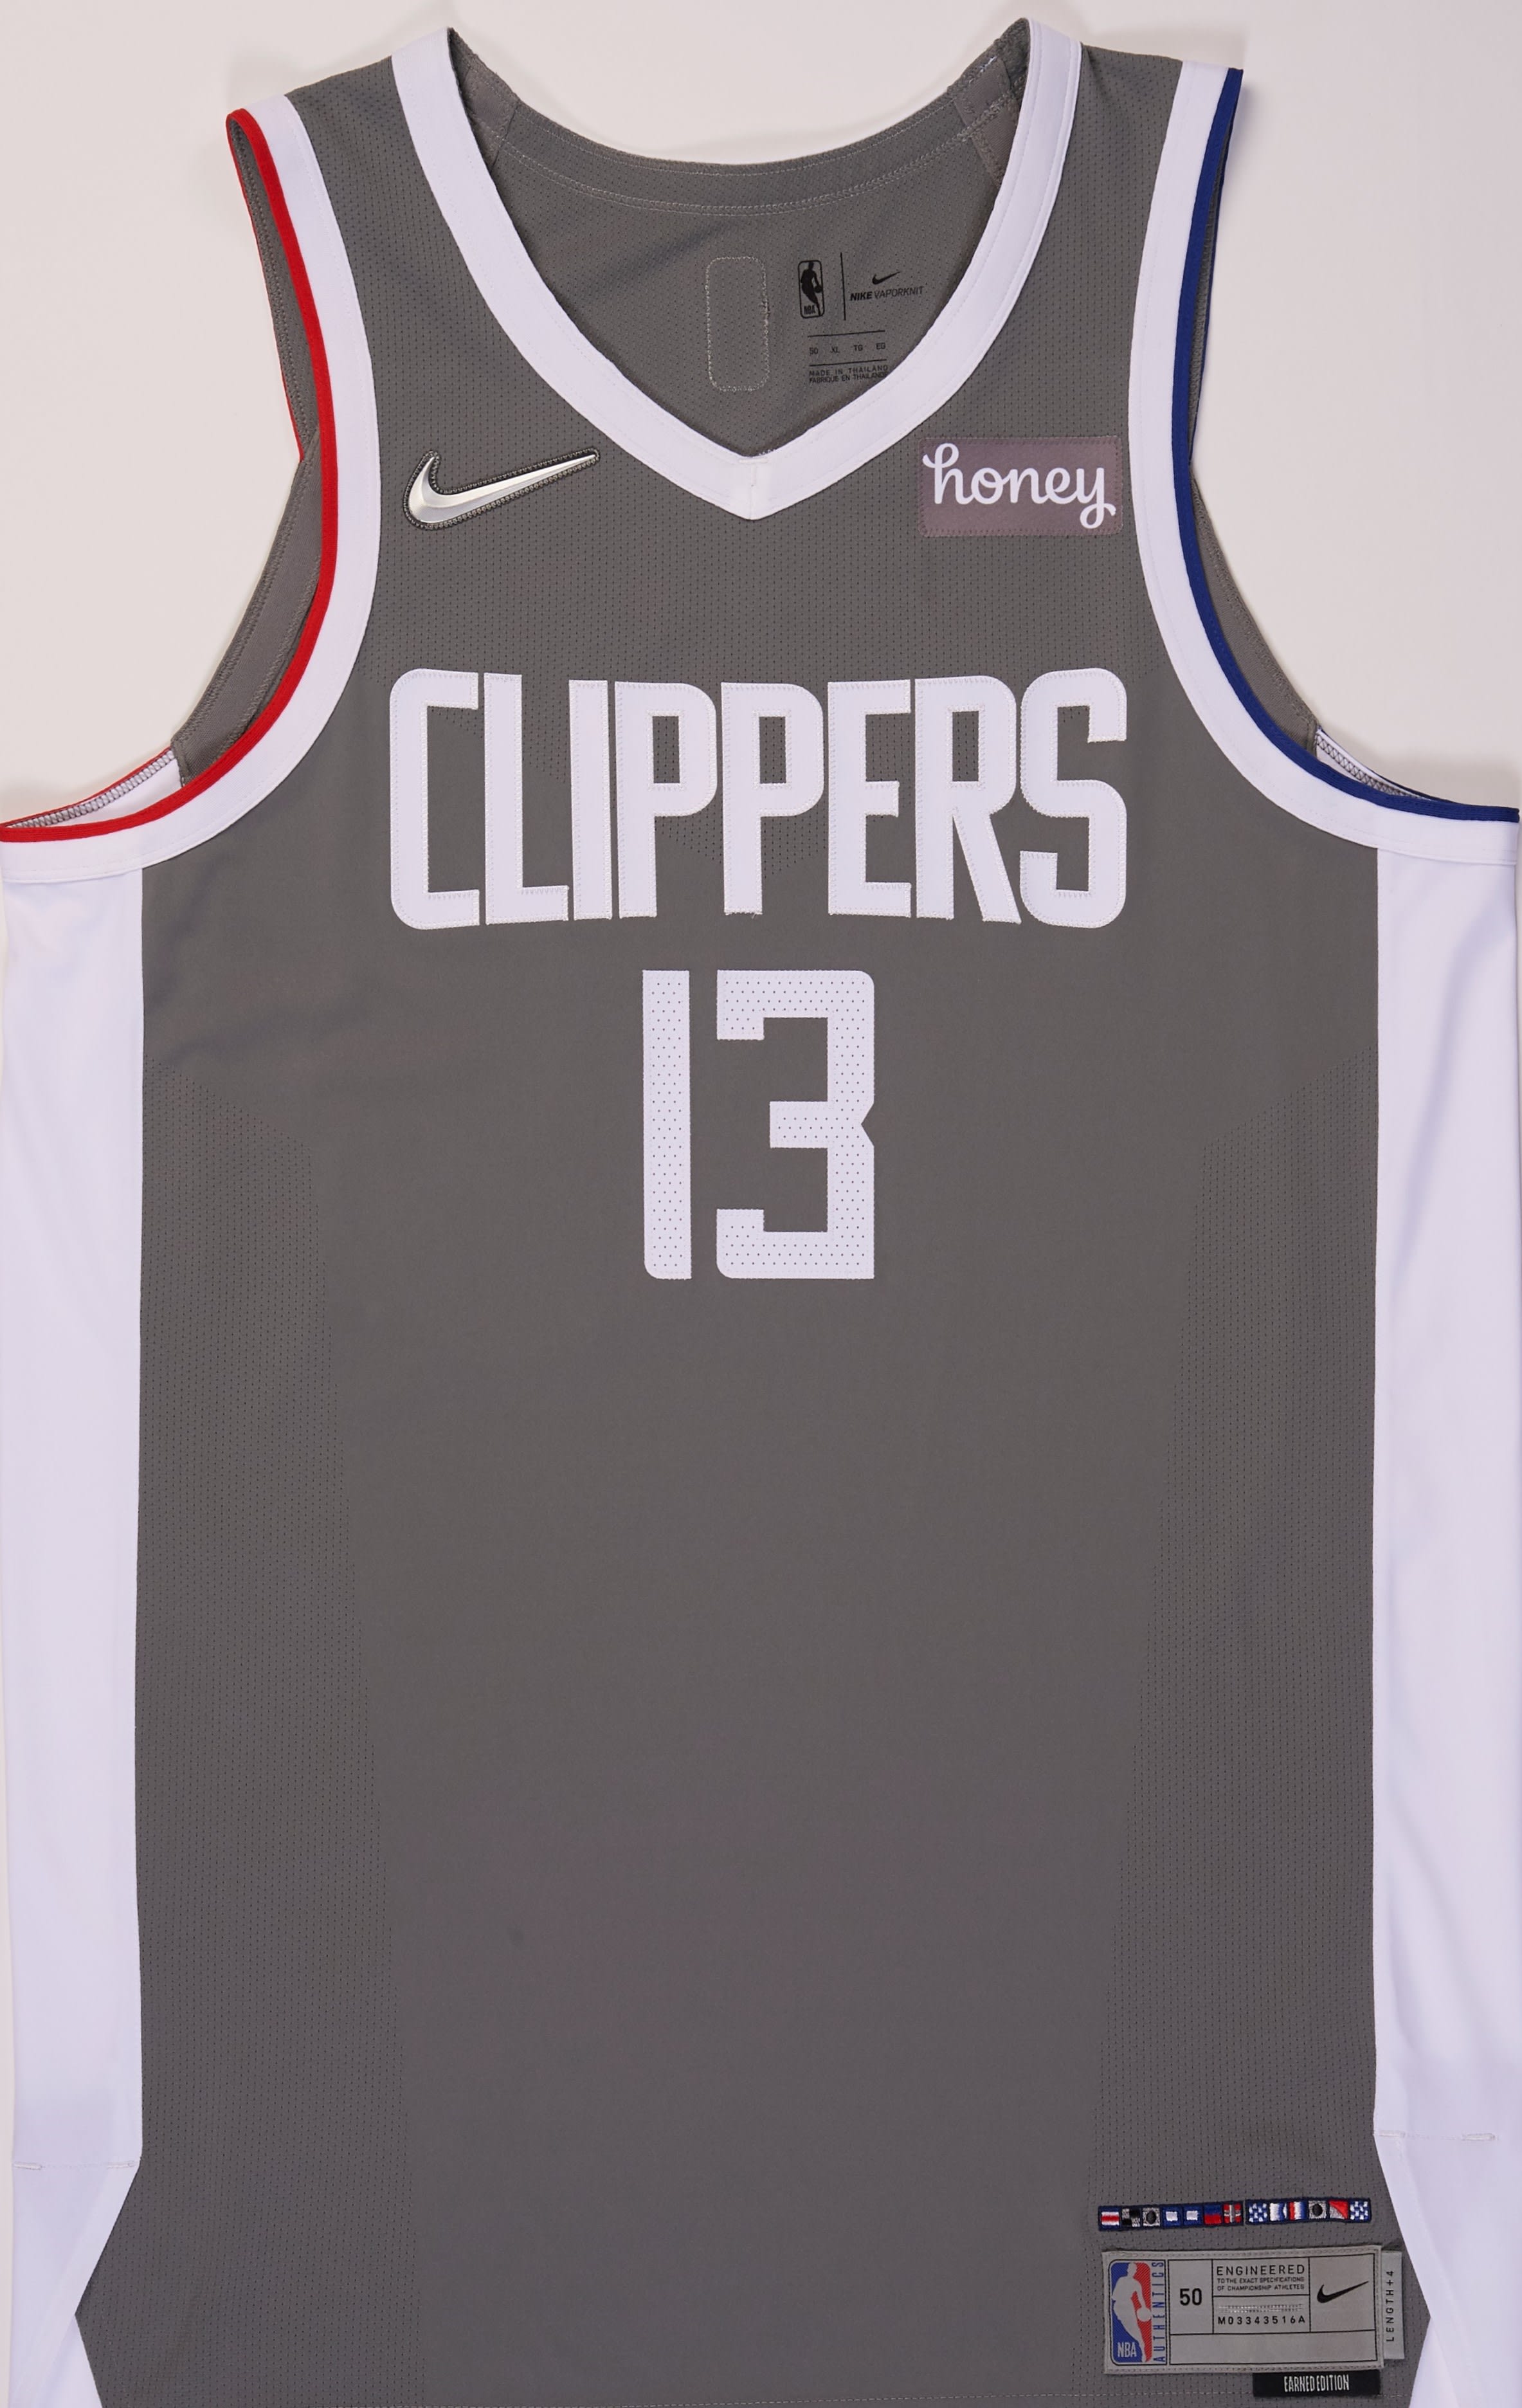 LA Clippers unveil their new 2020-21 City Edition uniform